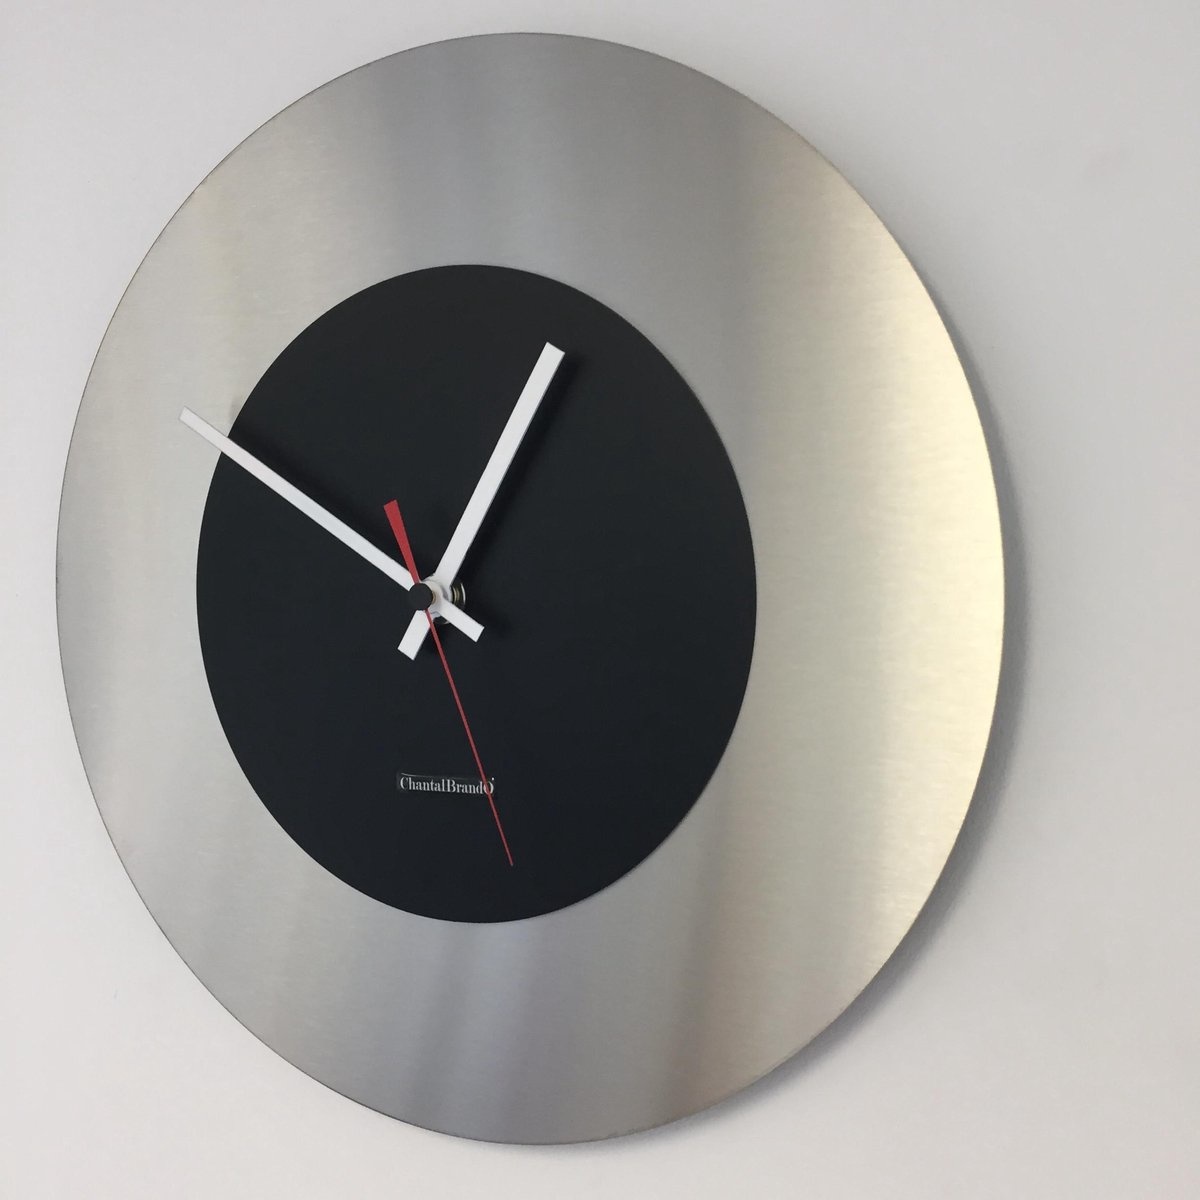 ChantalBrandO Design - Wall clock Firenze Black & Red Pointer Modern Design